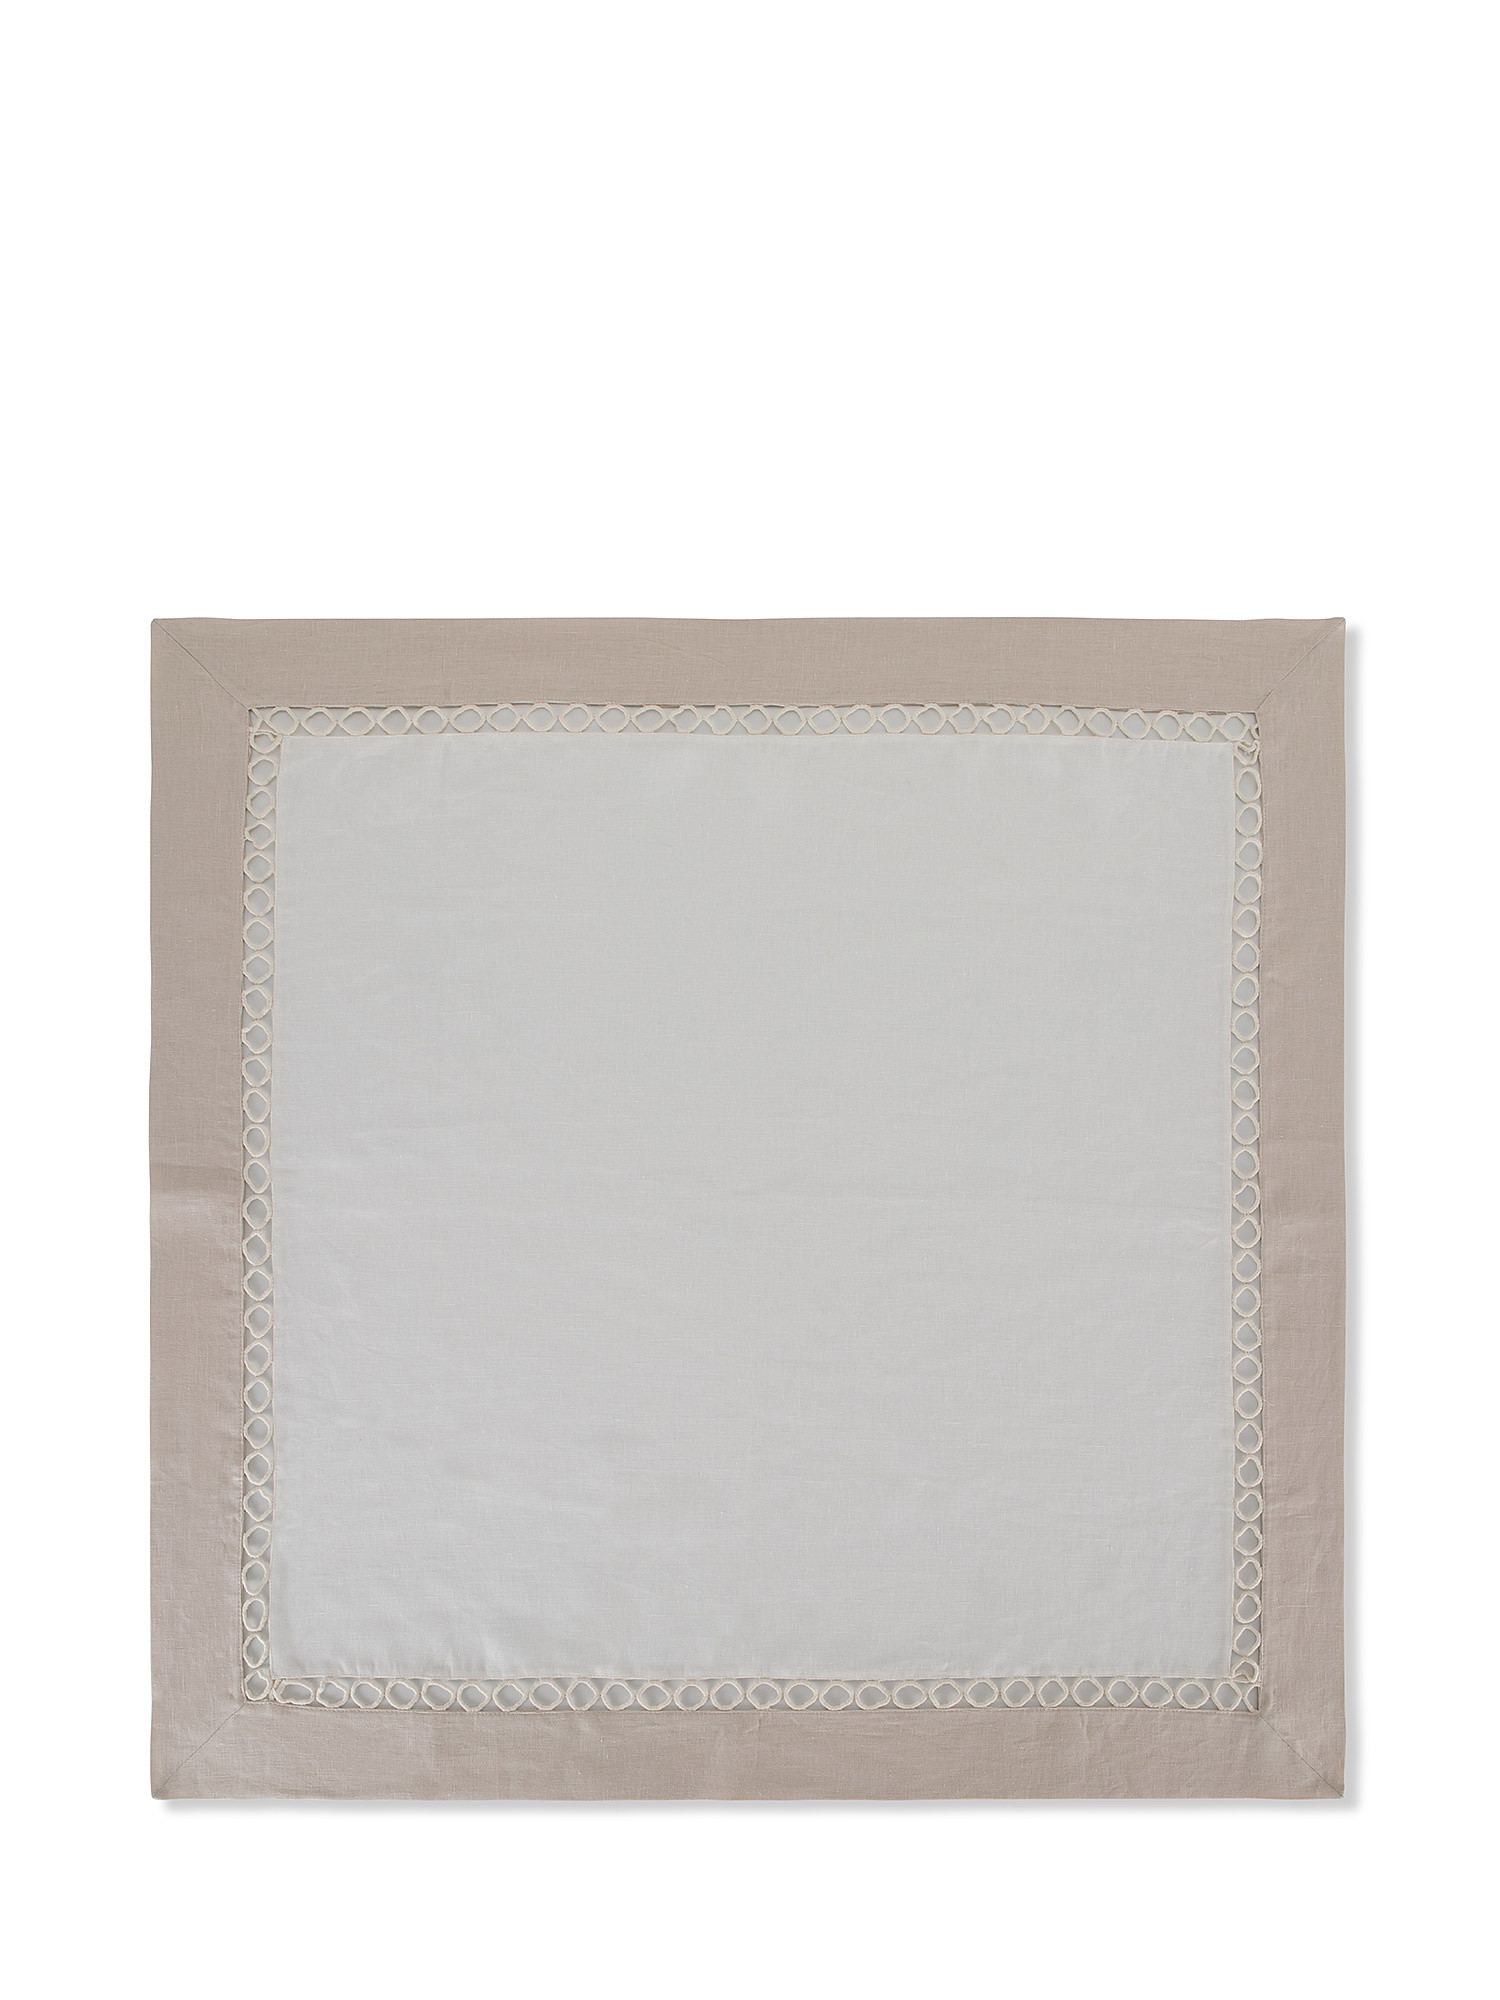 Centrotavola puro lino bordo in cotone, Bianco, large image number 0